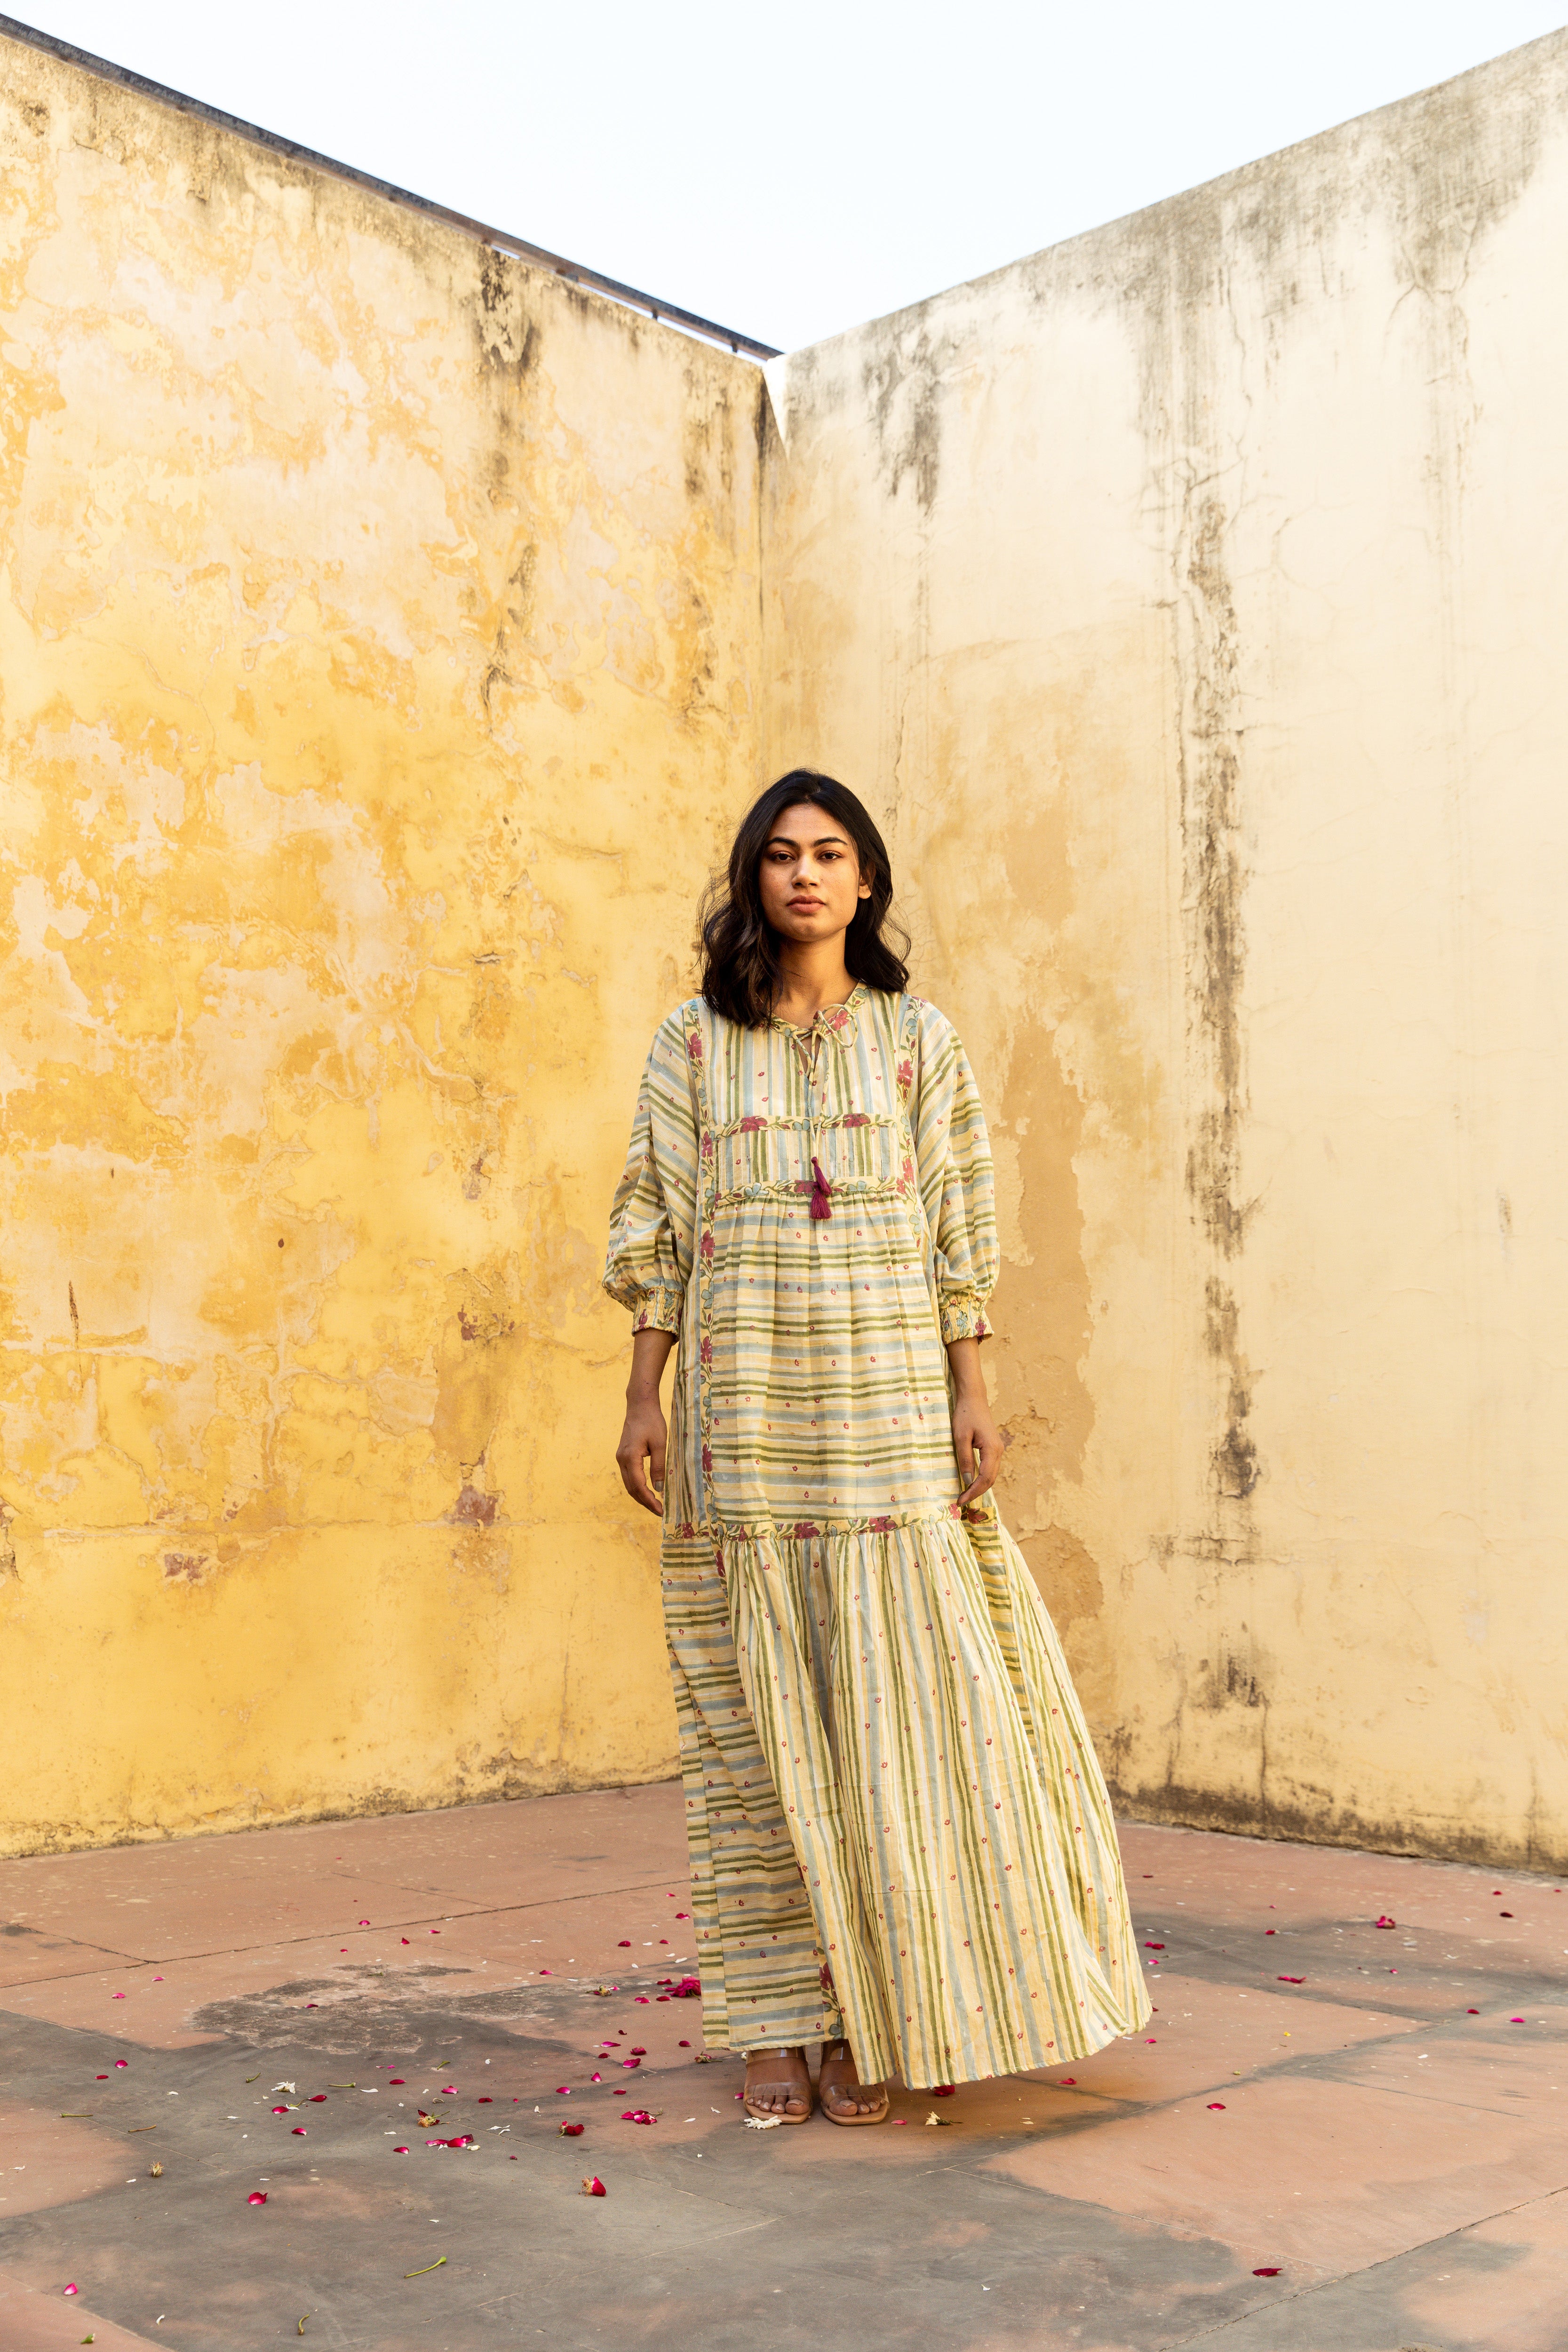 Manali Best Photo shoot contact us 7807711010 | Photoshoot, Cool photos,  Designer dresses indian